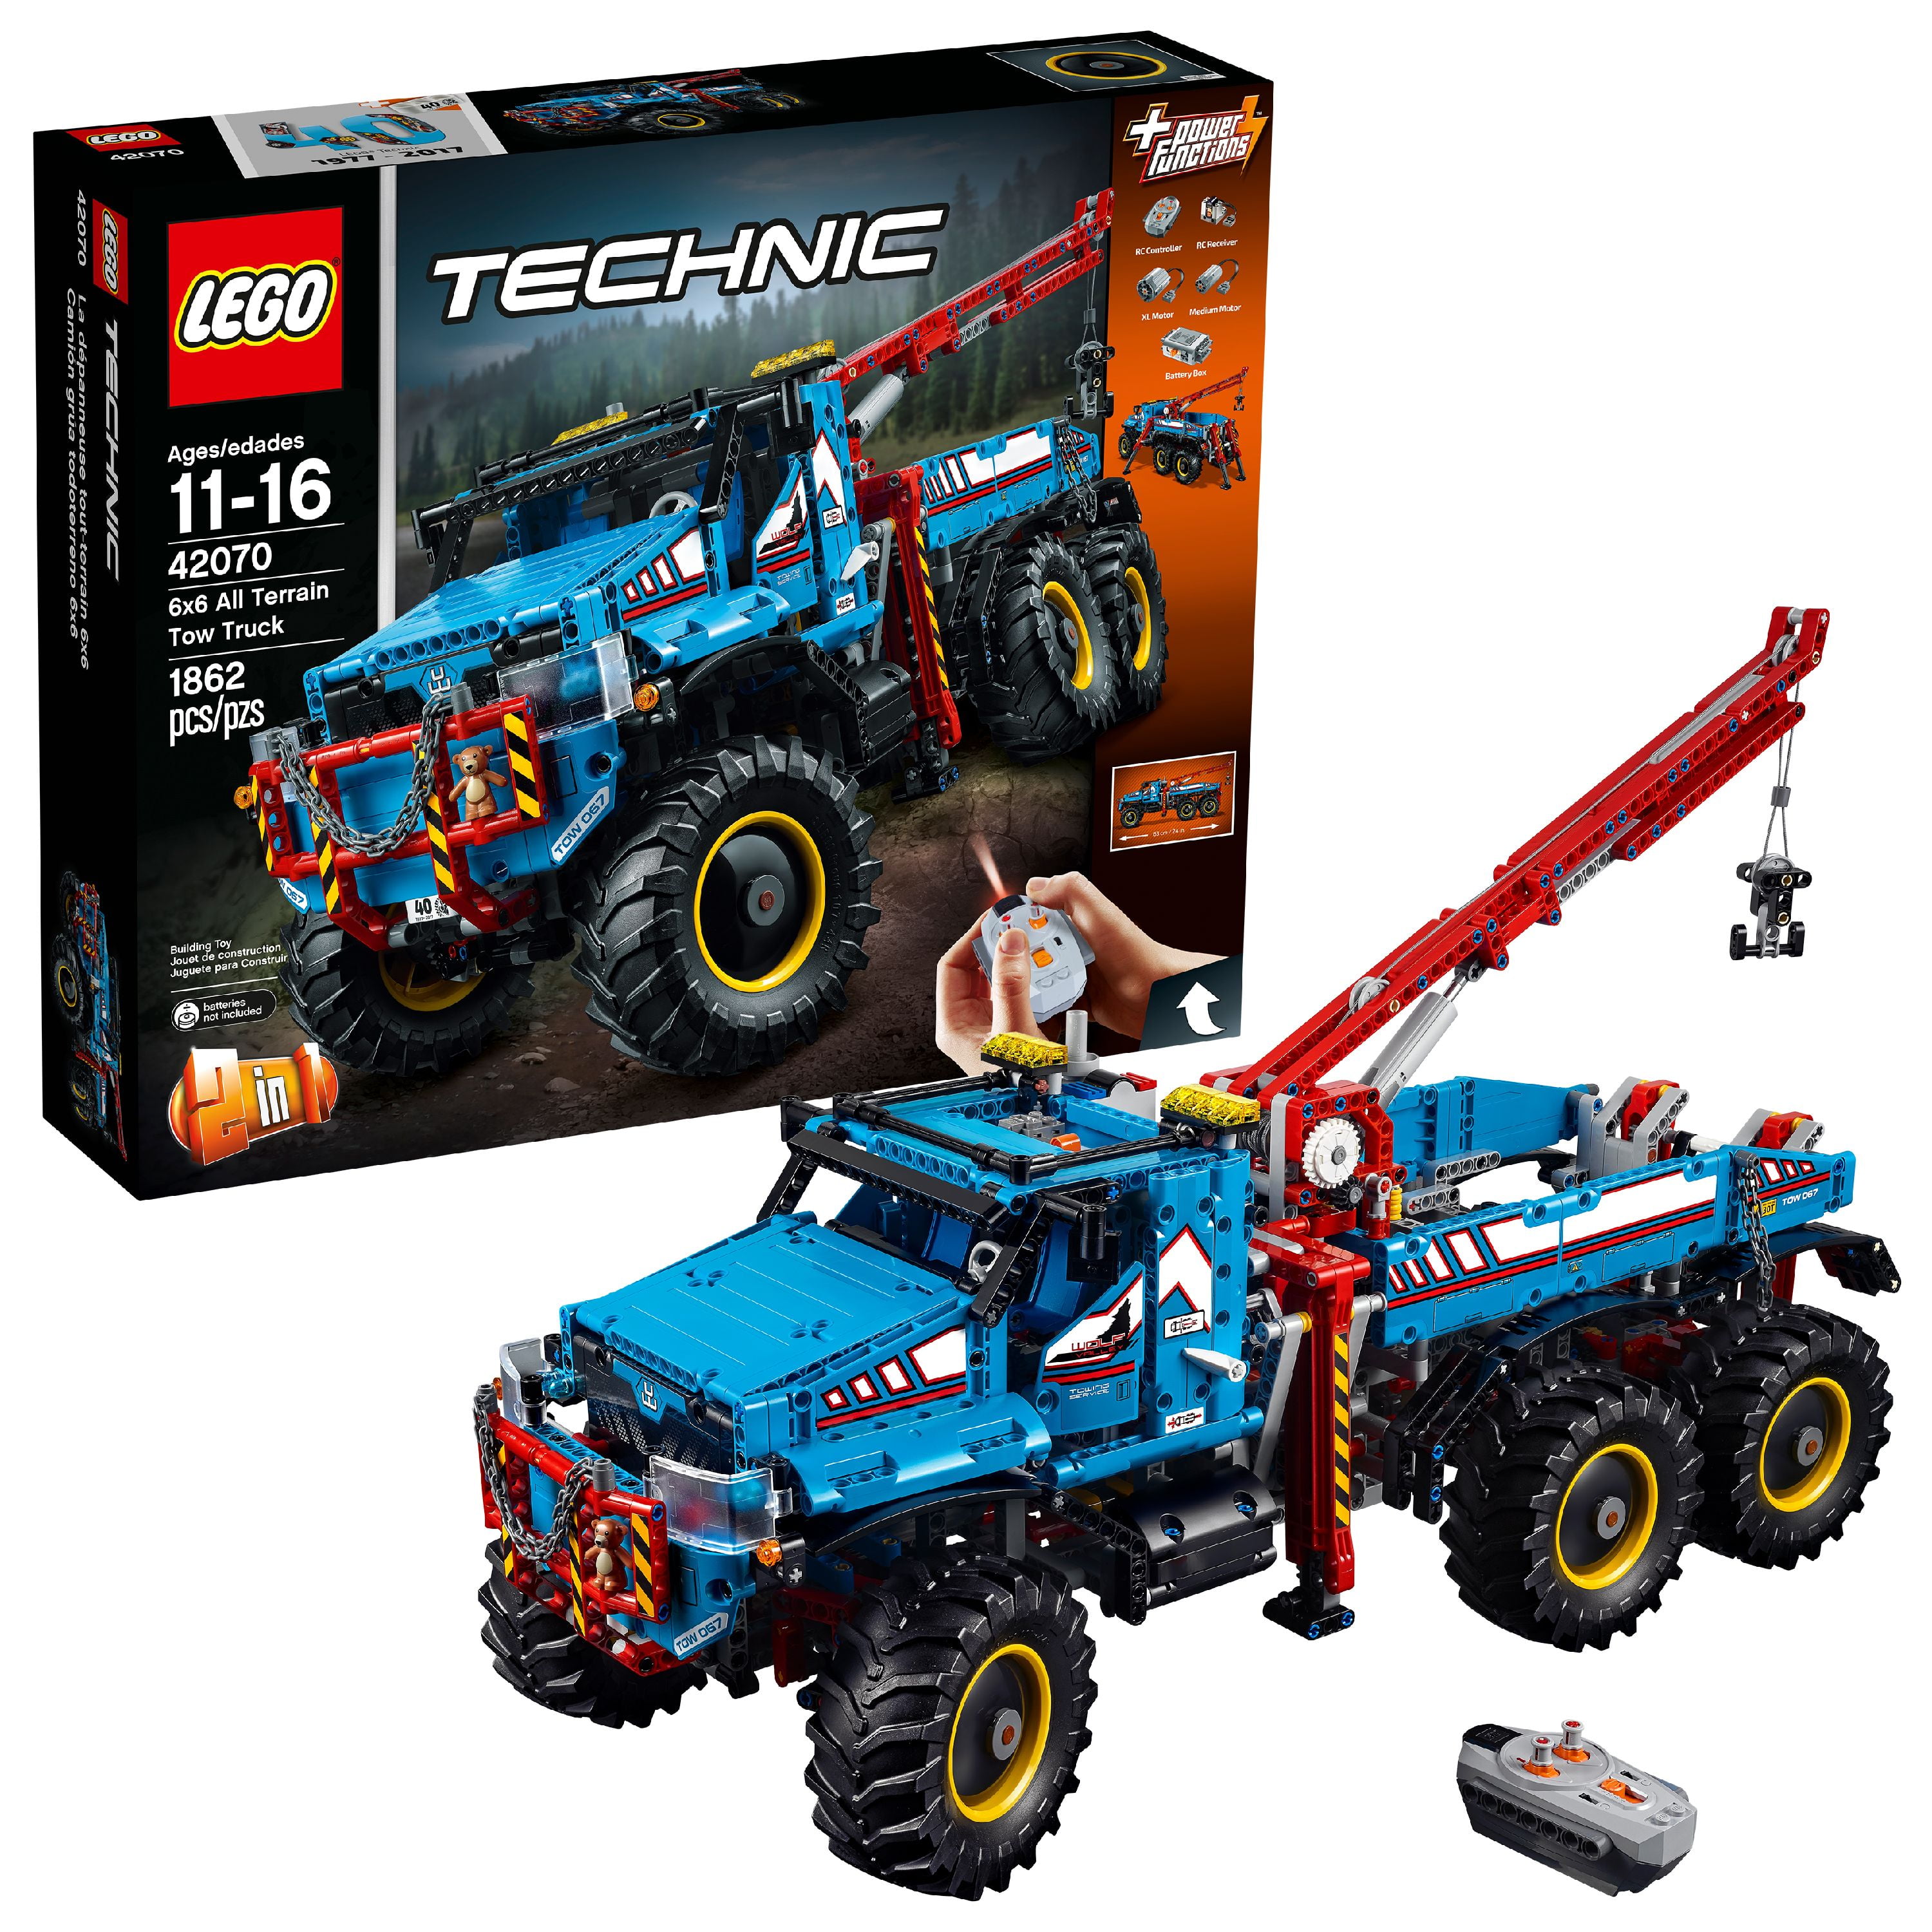 New sealed LEGO Technic 42070 6x6 All Terrain Tow Truck Intl 